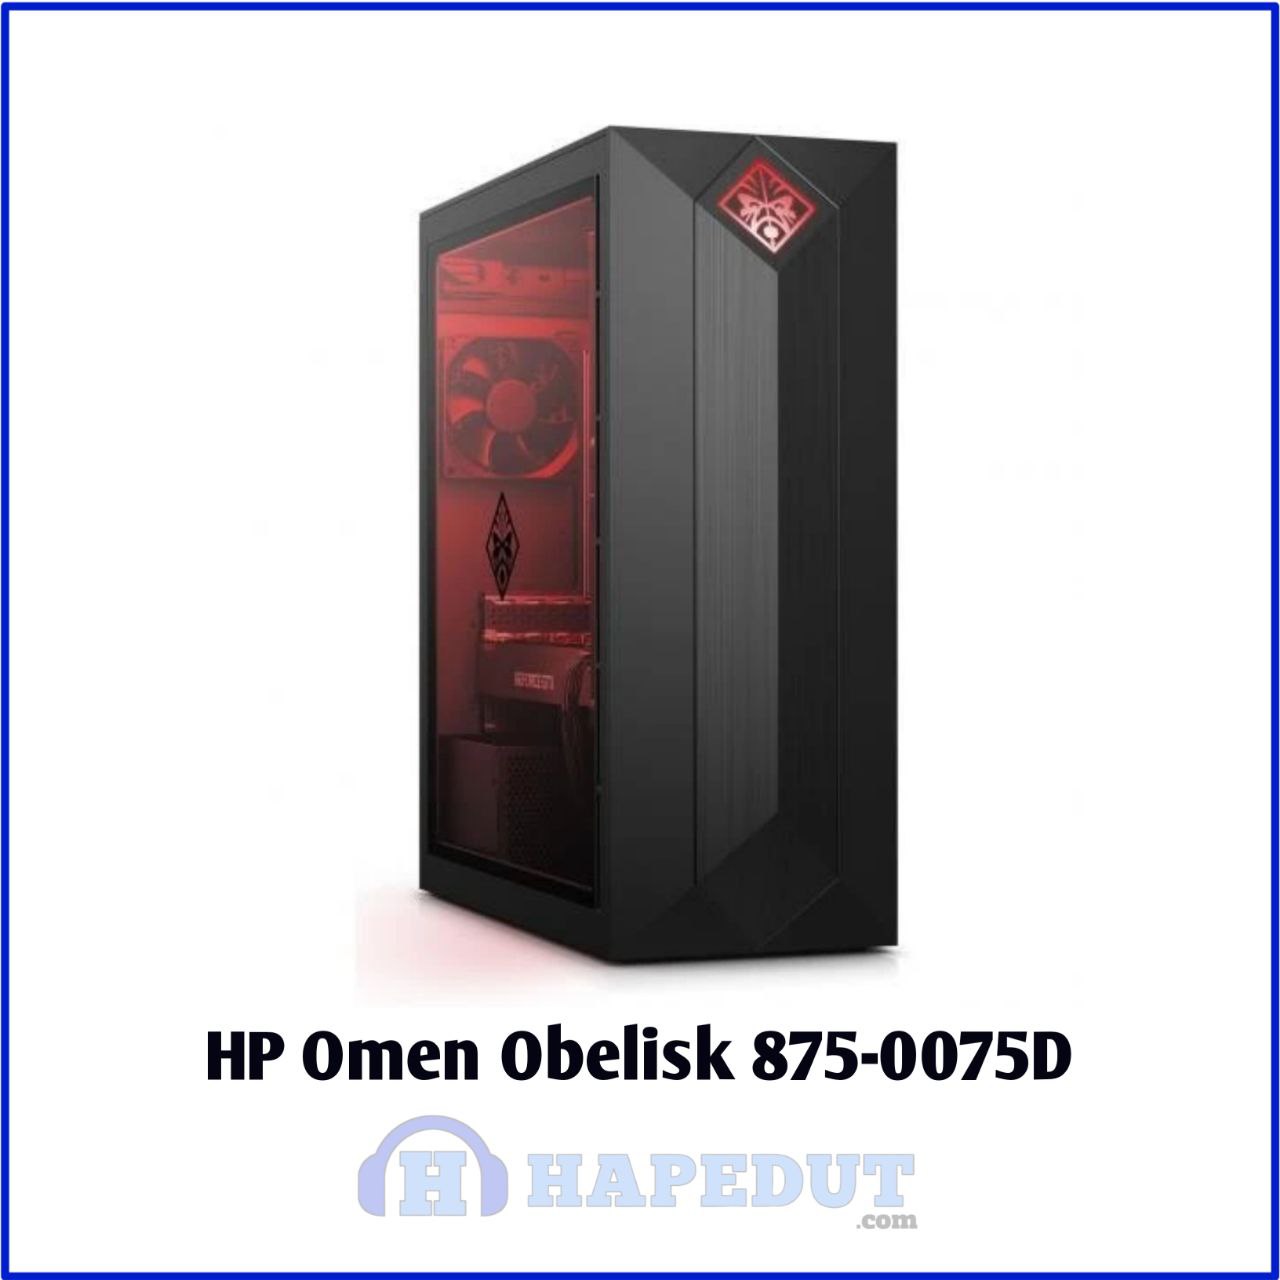 HP Omen Obelisk 875-0075D : Hapedut